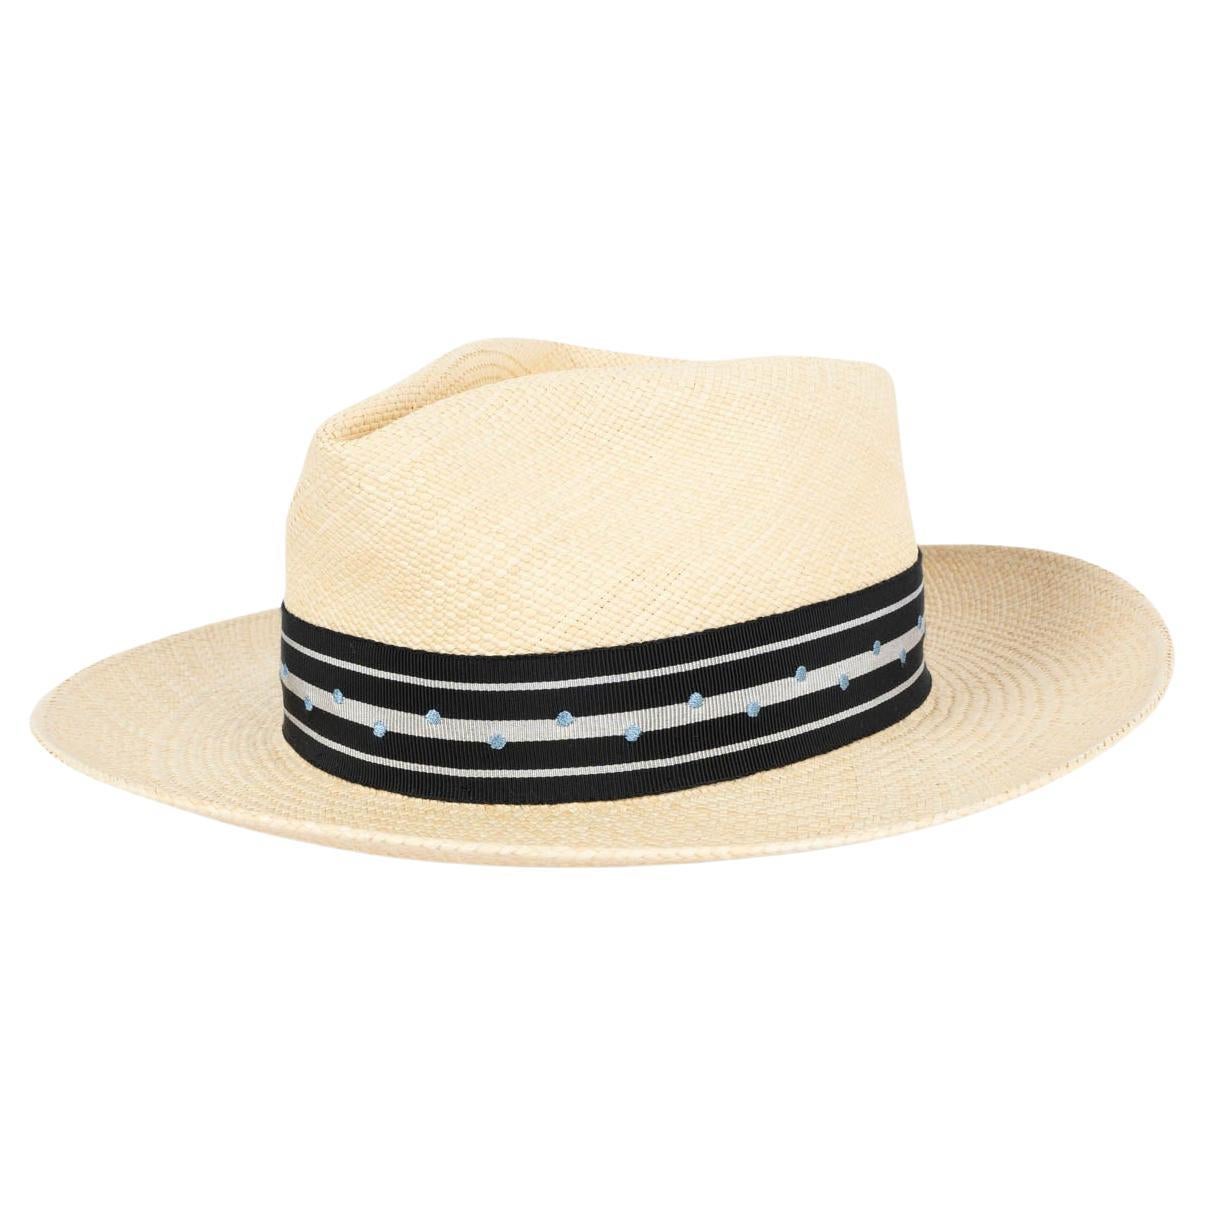 Chanel Straw Boater Hat M